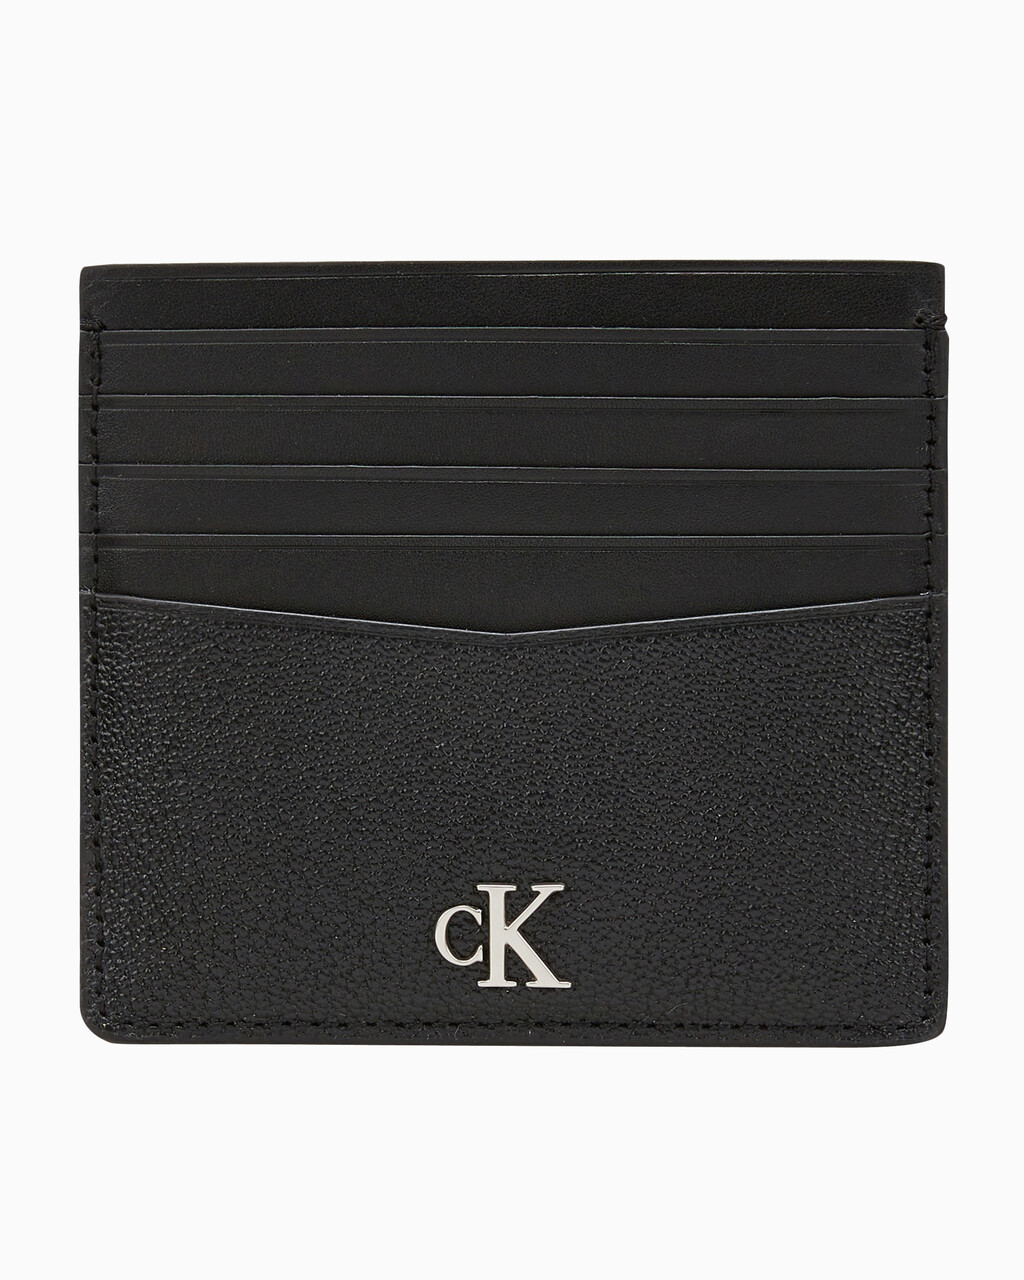 Buy 남성 CKJ 모노 하드웨어 카드케이스 in color BLACK